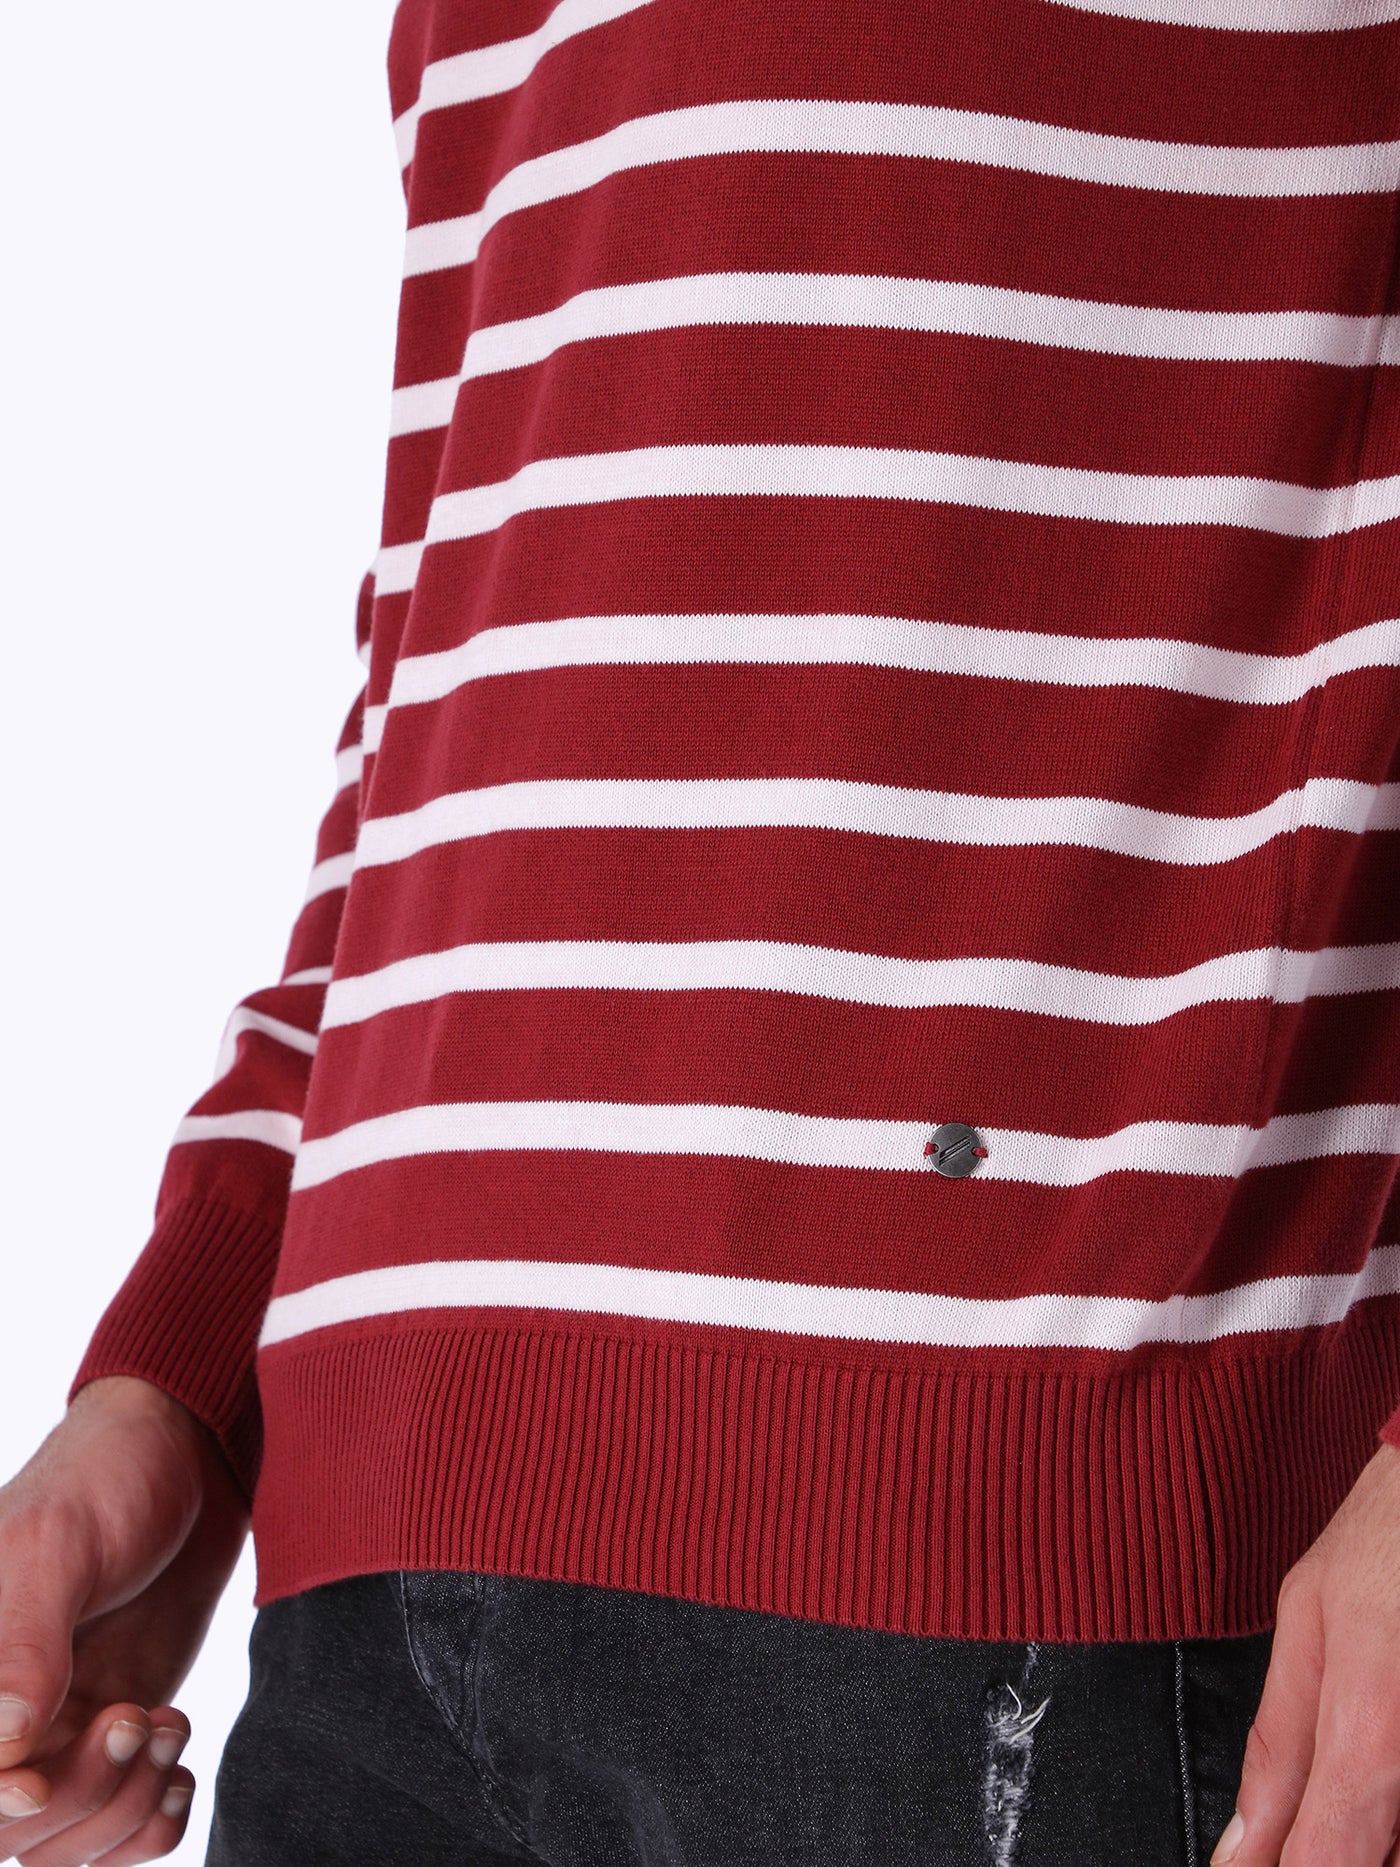 Daniel Hechter Men's Striped Sweater